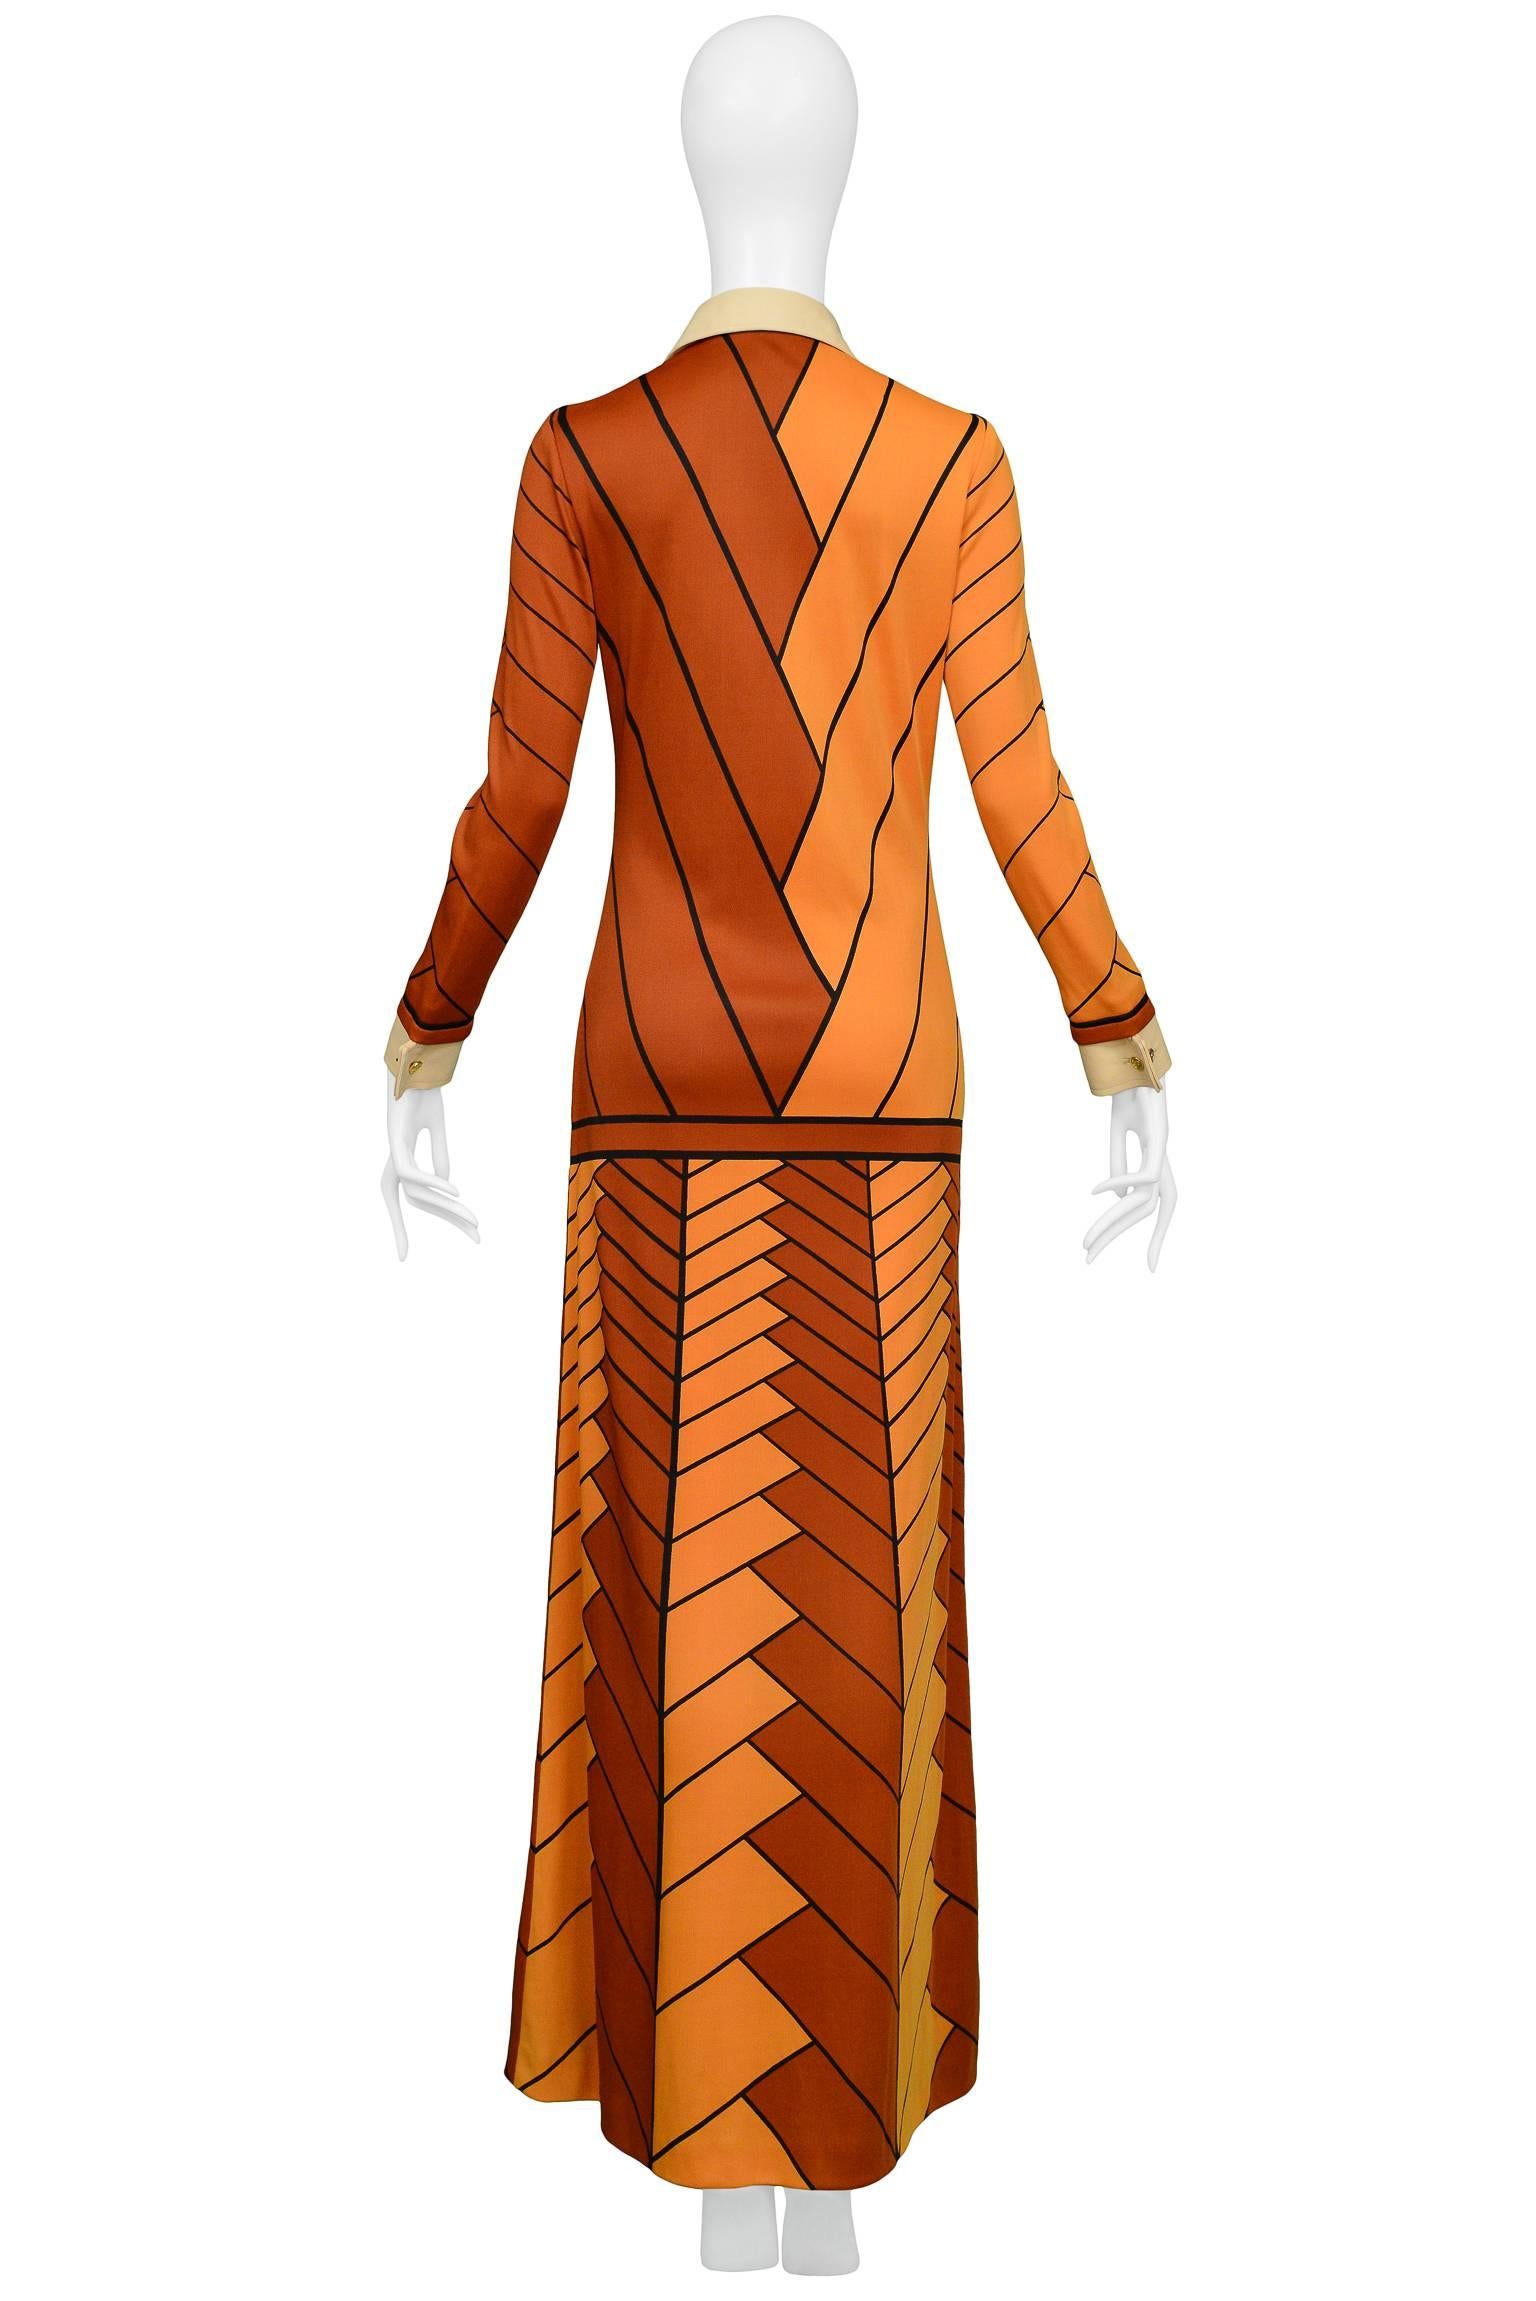 Women's Roberta di Camerino Orange & Rust Chevron Maxi Dress 